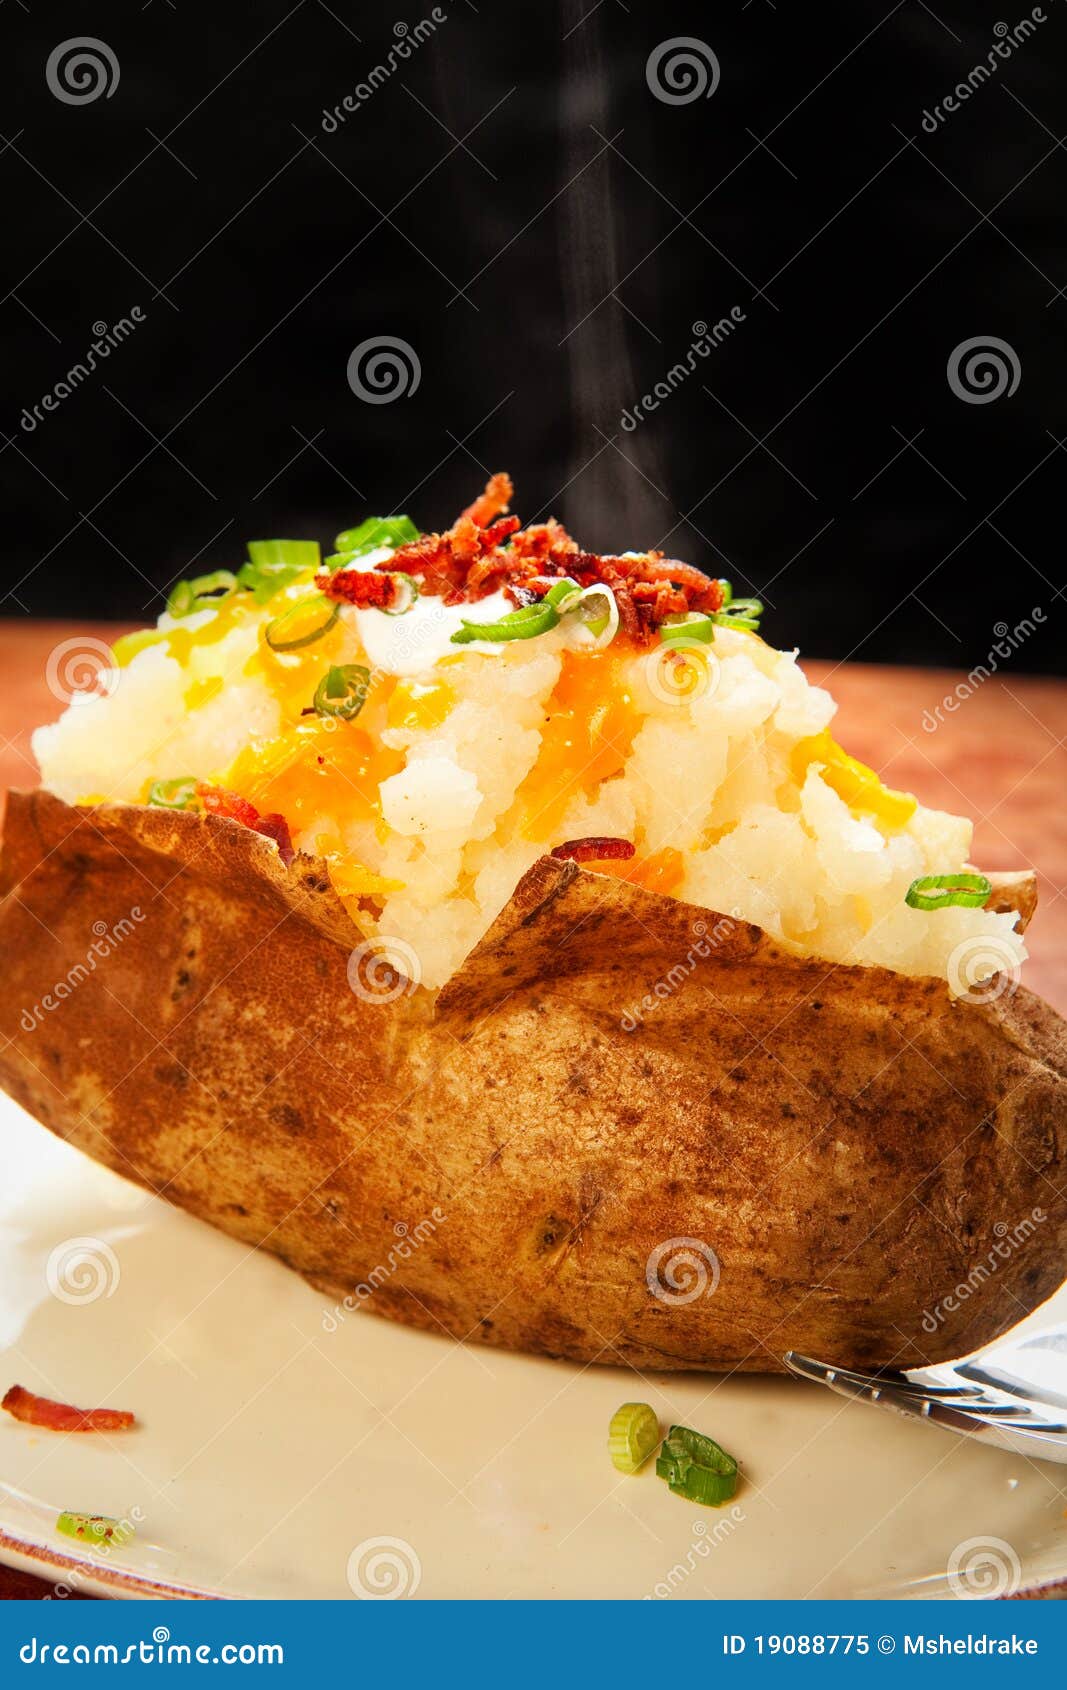 loaded baked potato